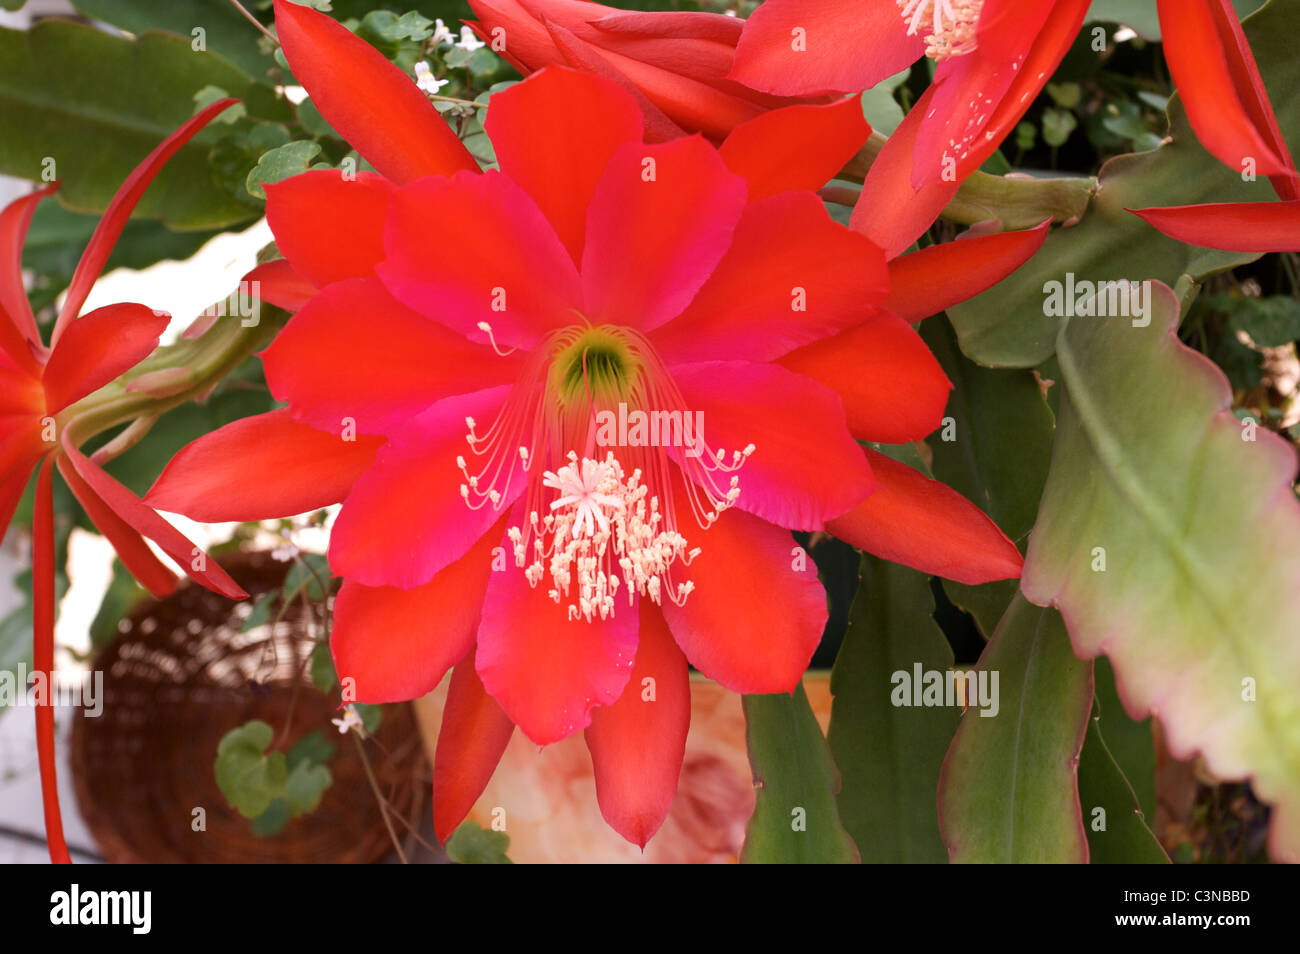 Epiphyllum "Slightly Sassy" red cactus flowers in conservatory Stock Photo